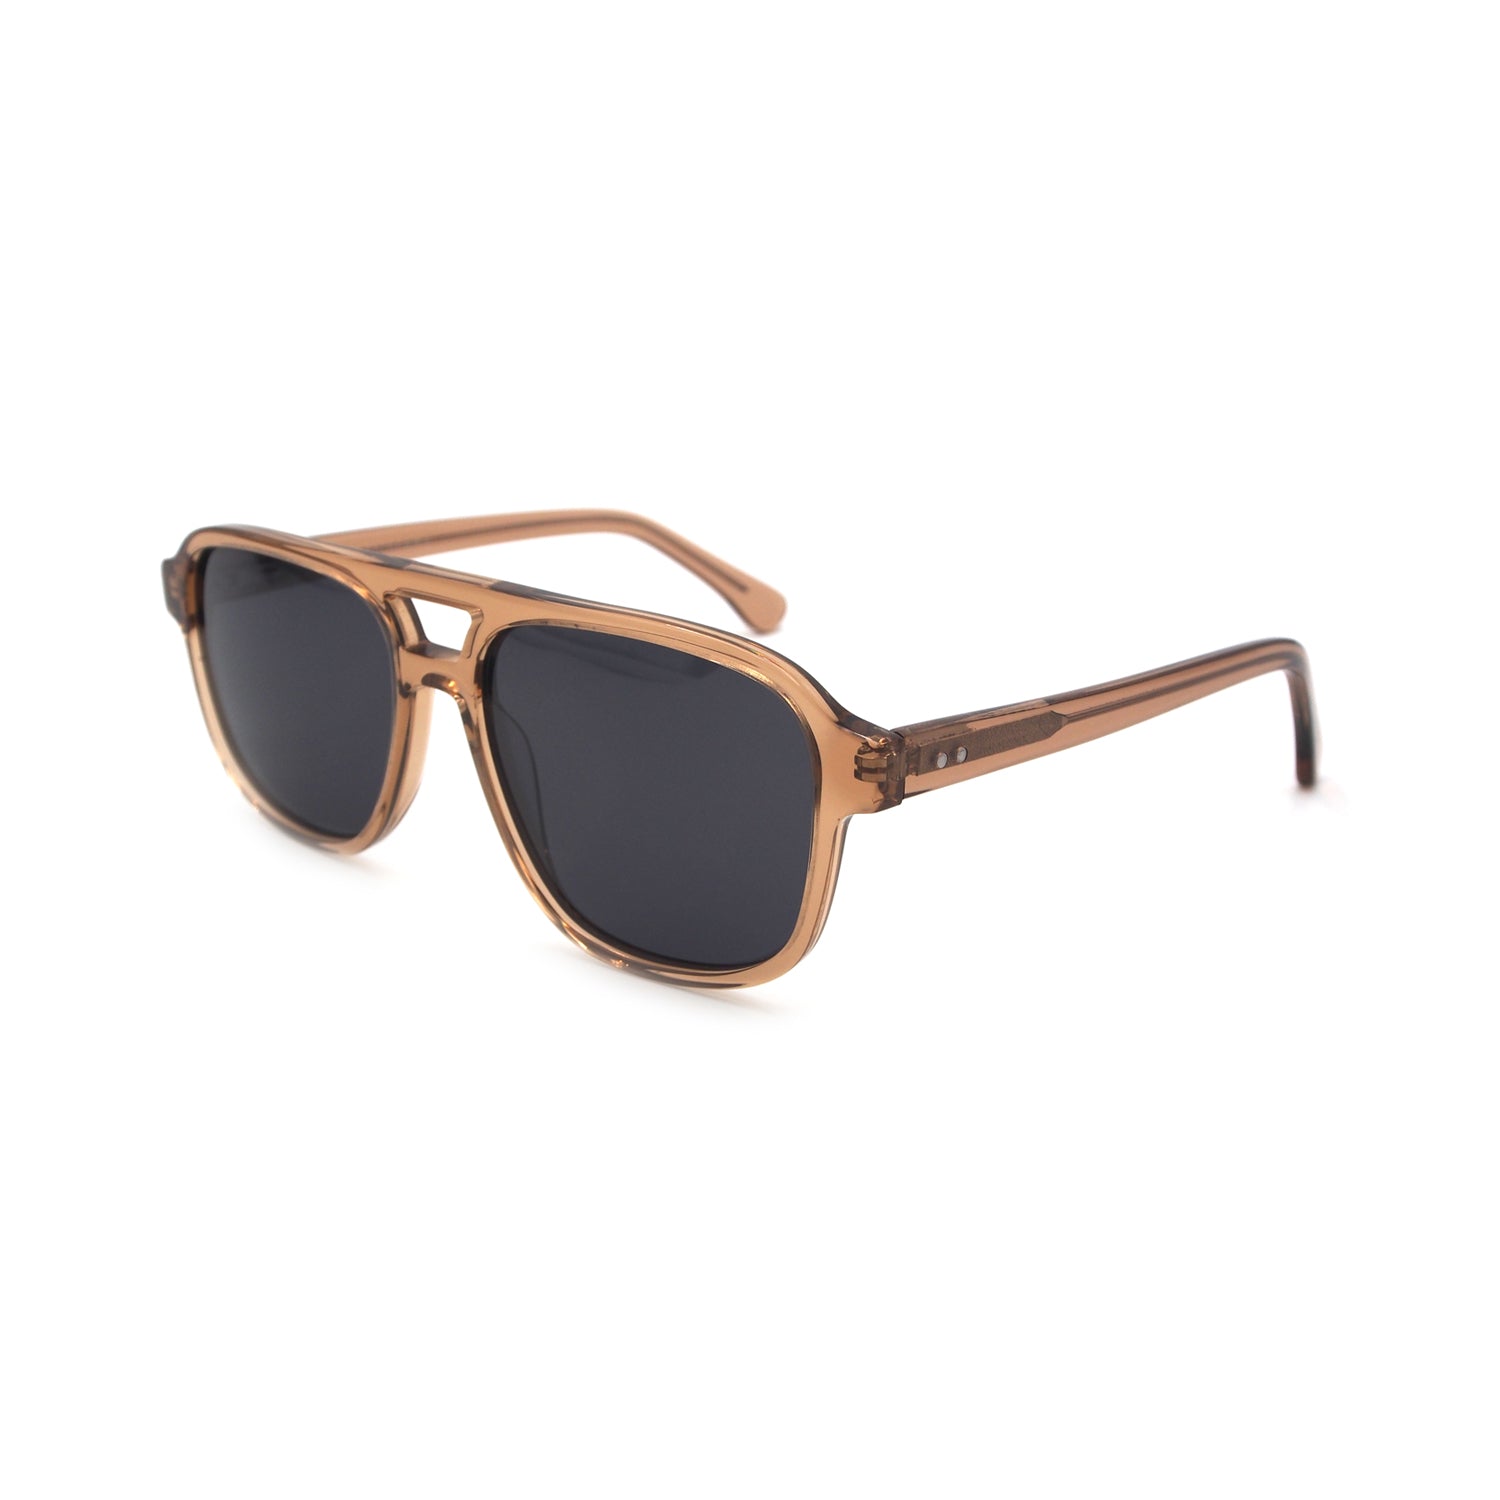 Bentley in Chestnut Sunglasses - sightonomy